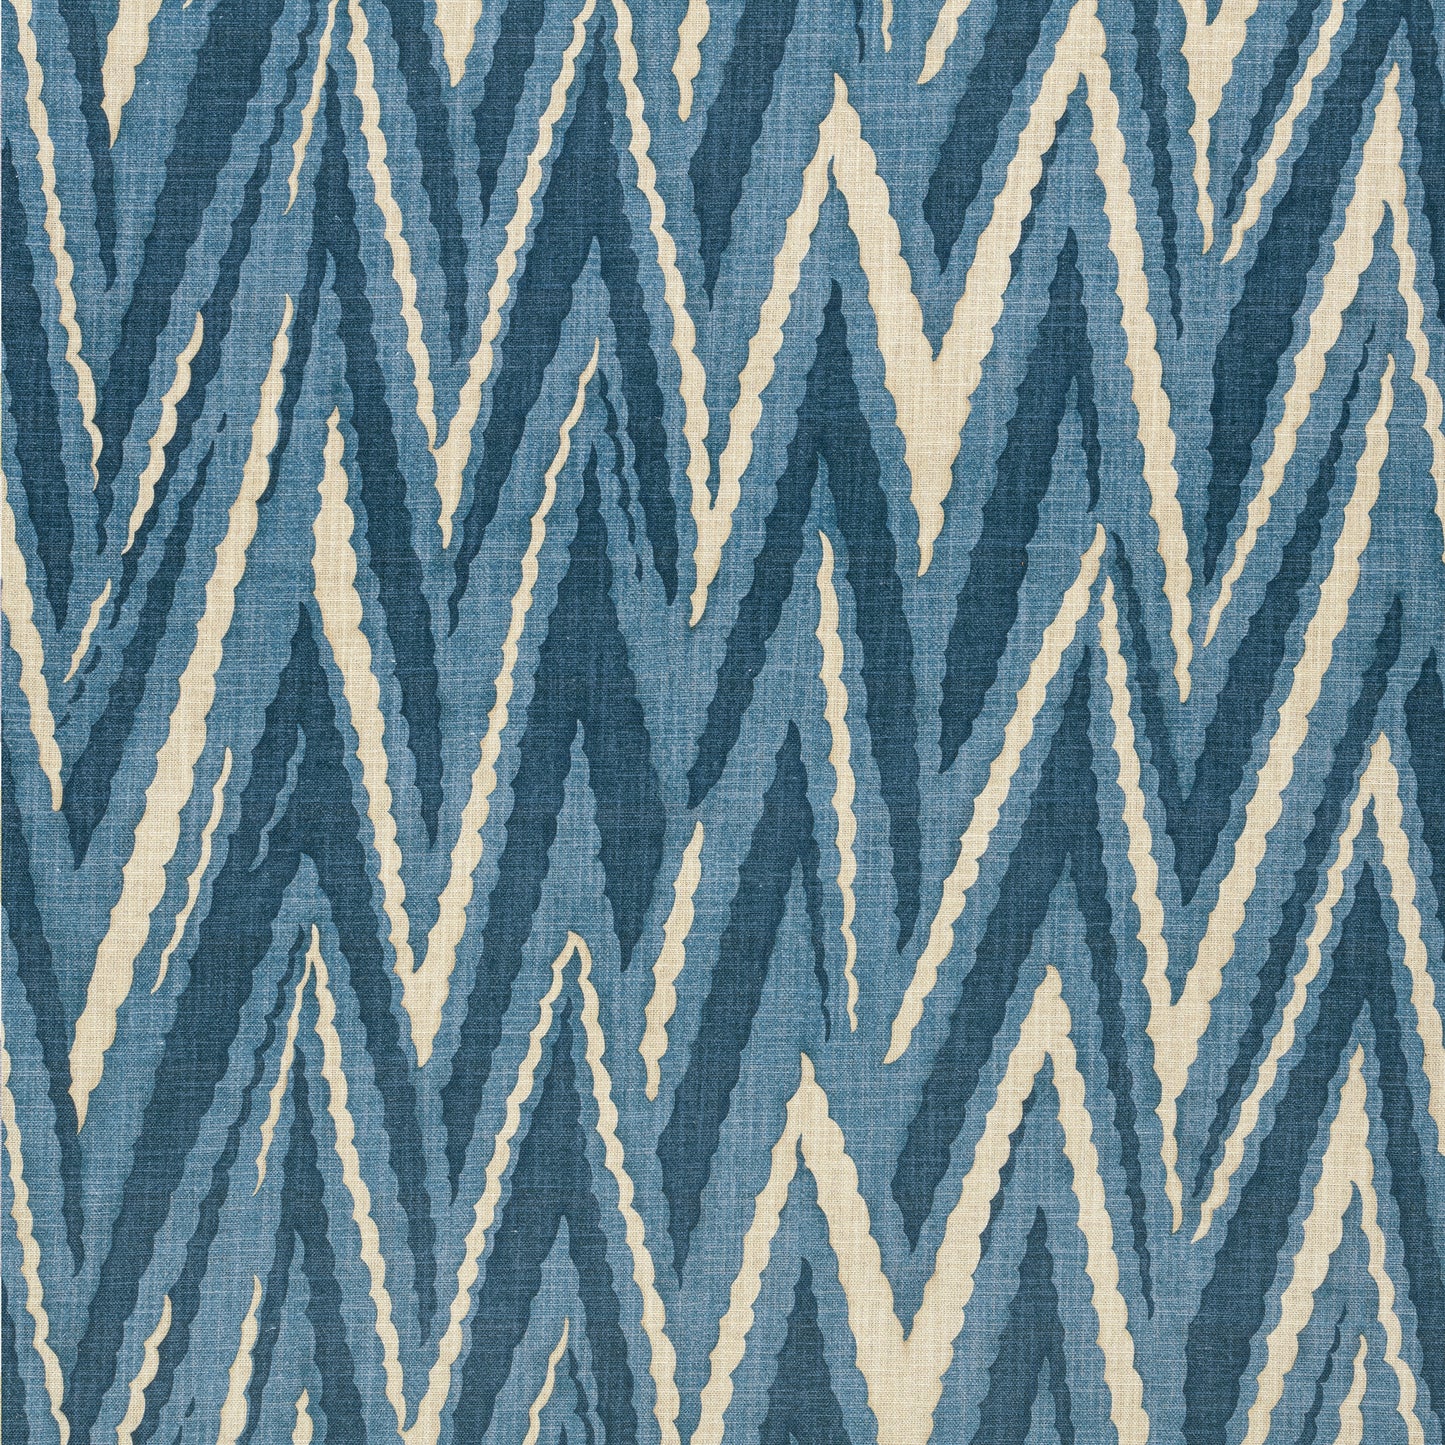 Purchase  Ann French Fabric SKU# AF23157  pattern name  Highland Peak